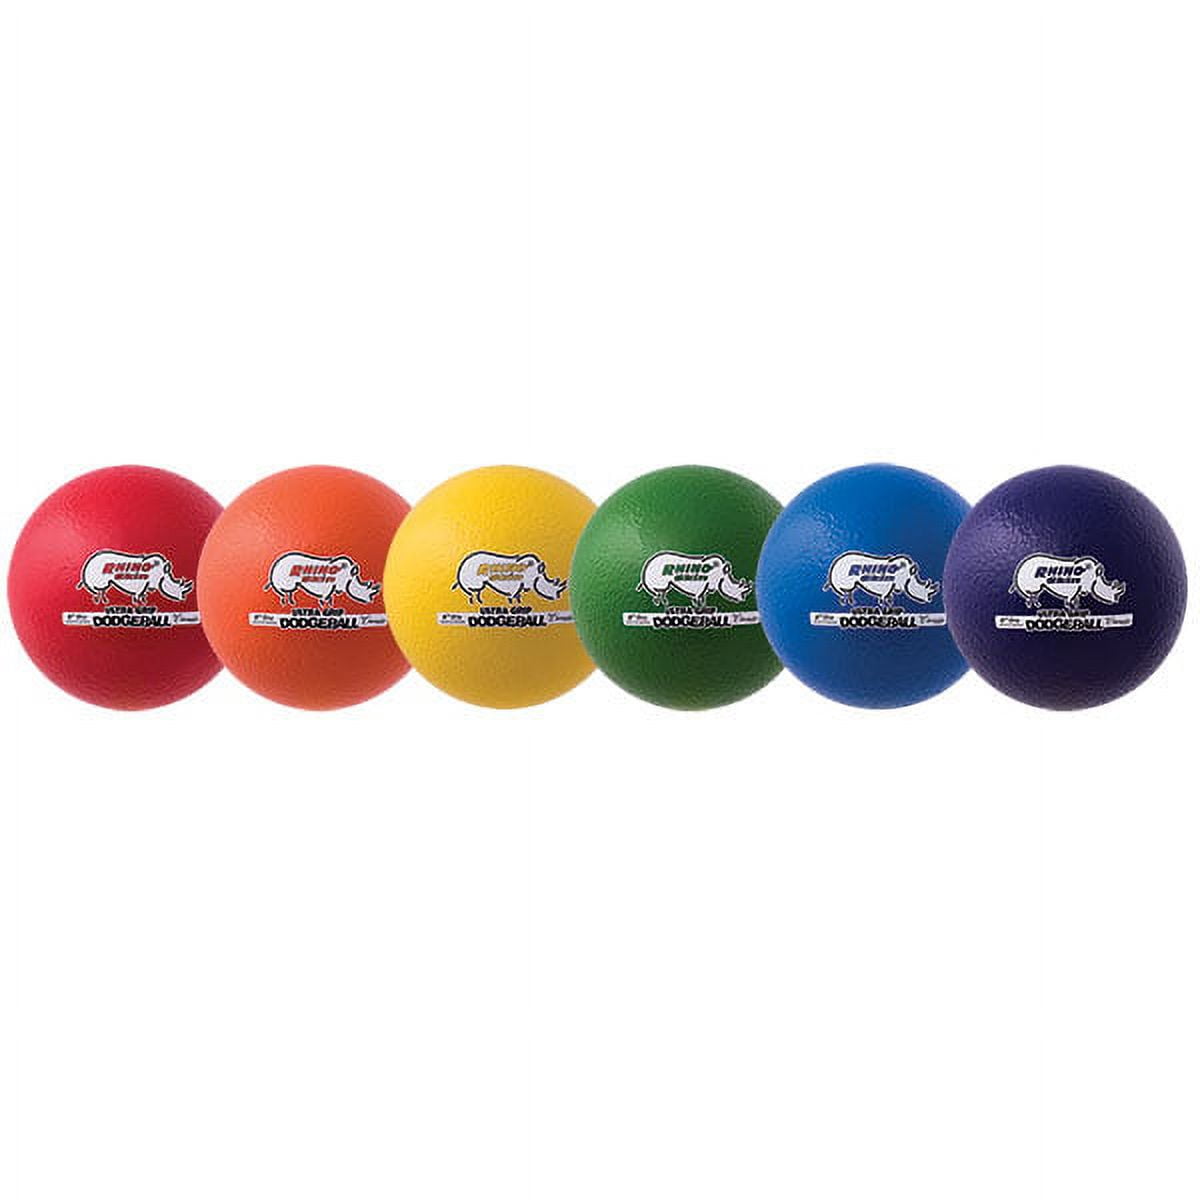 Rhino Skin Low Bounce Ultra Grip Dodgeball Set, Neon - Set of 6 -  Champion Sports, CH55996